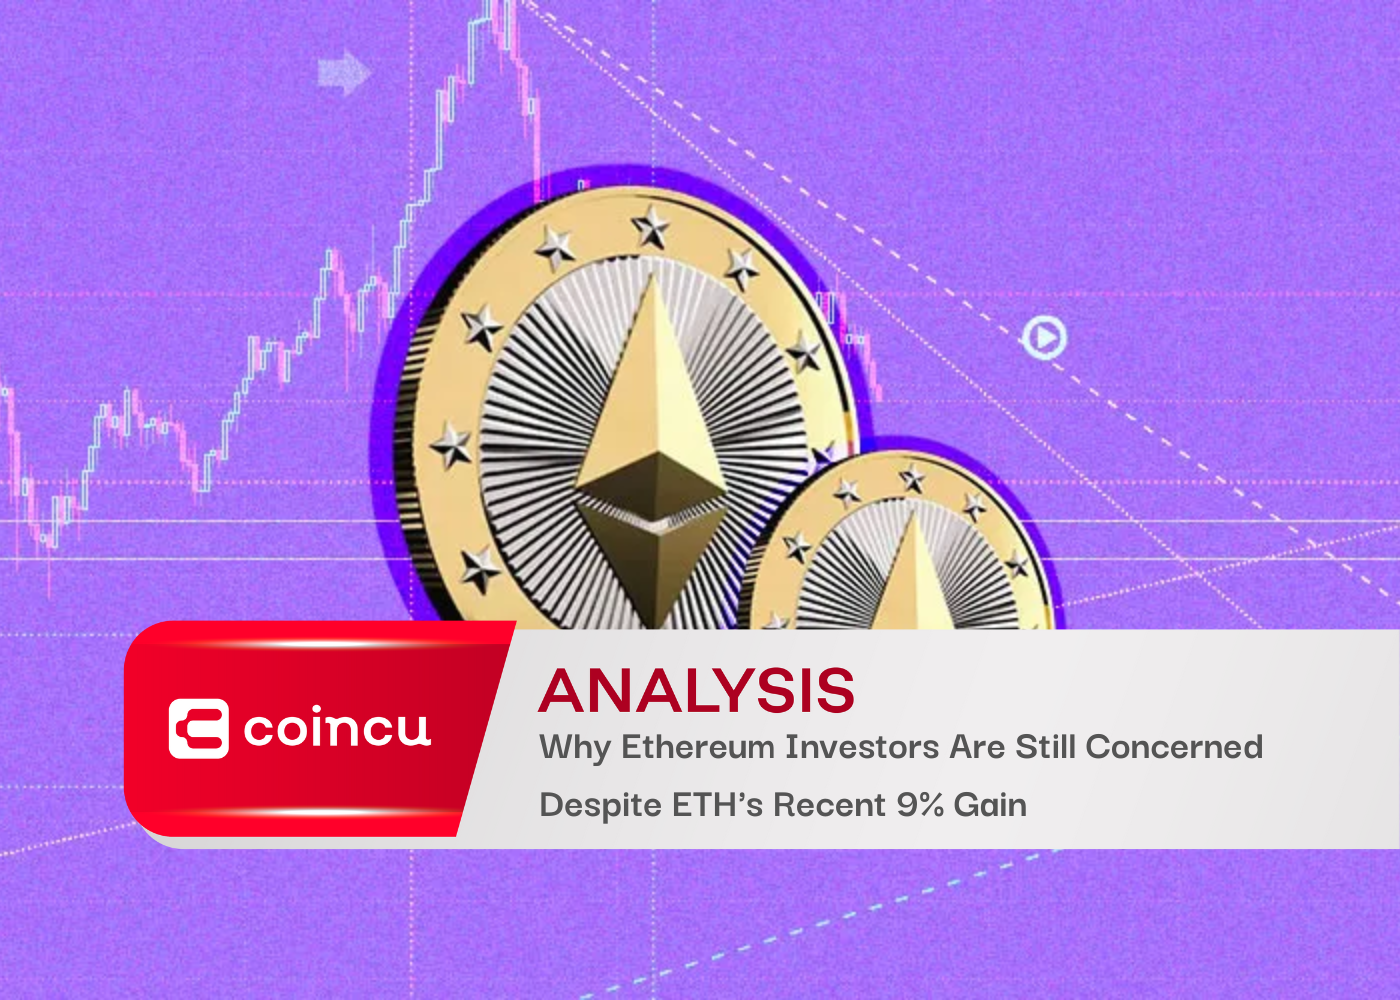 ETH의 최근 9% 상승에도 불구하고 Ethereum 투자자들이 여전히 우려하는 이유